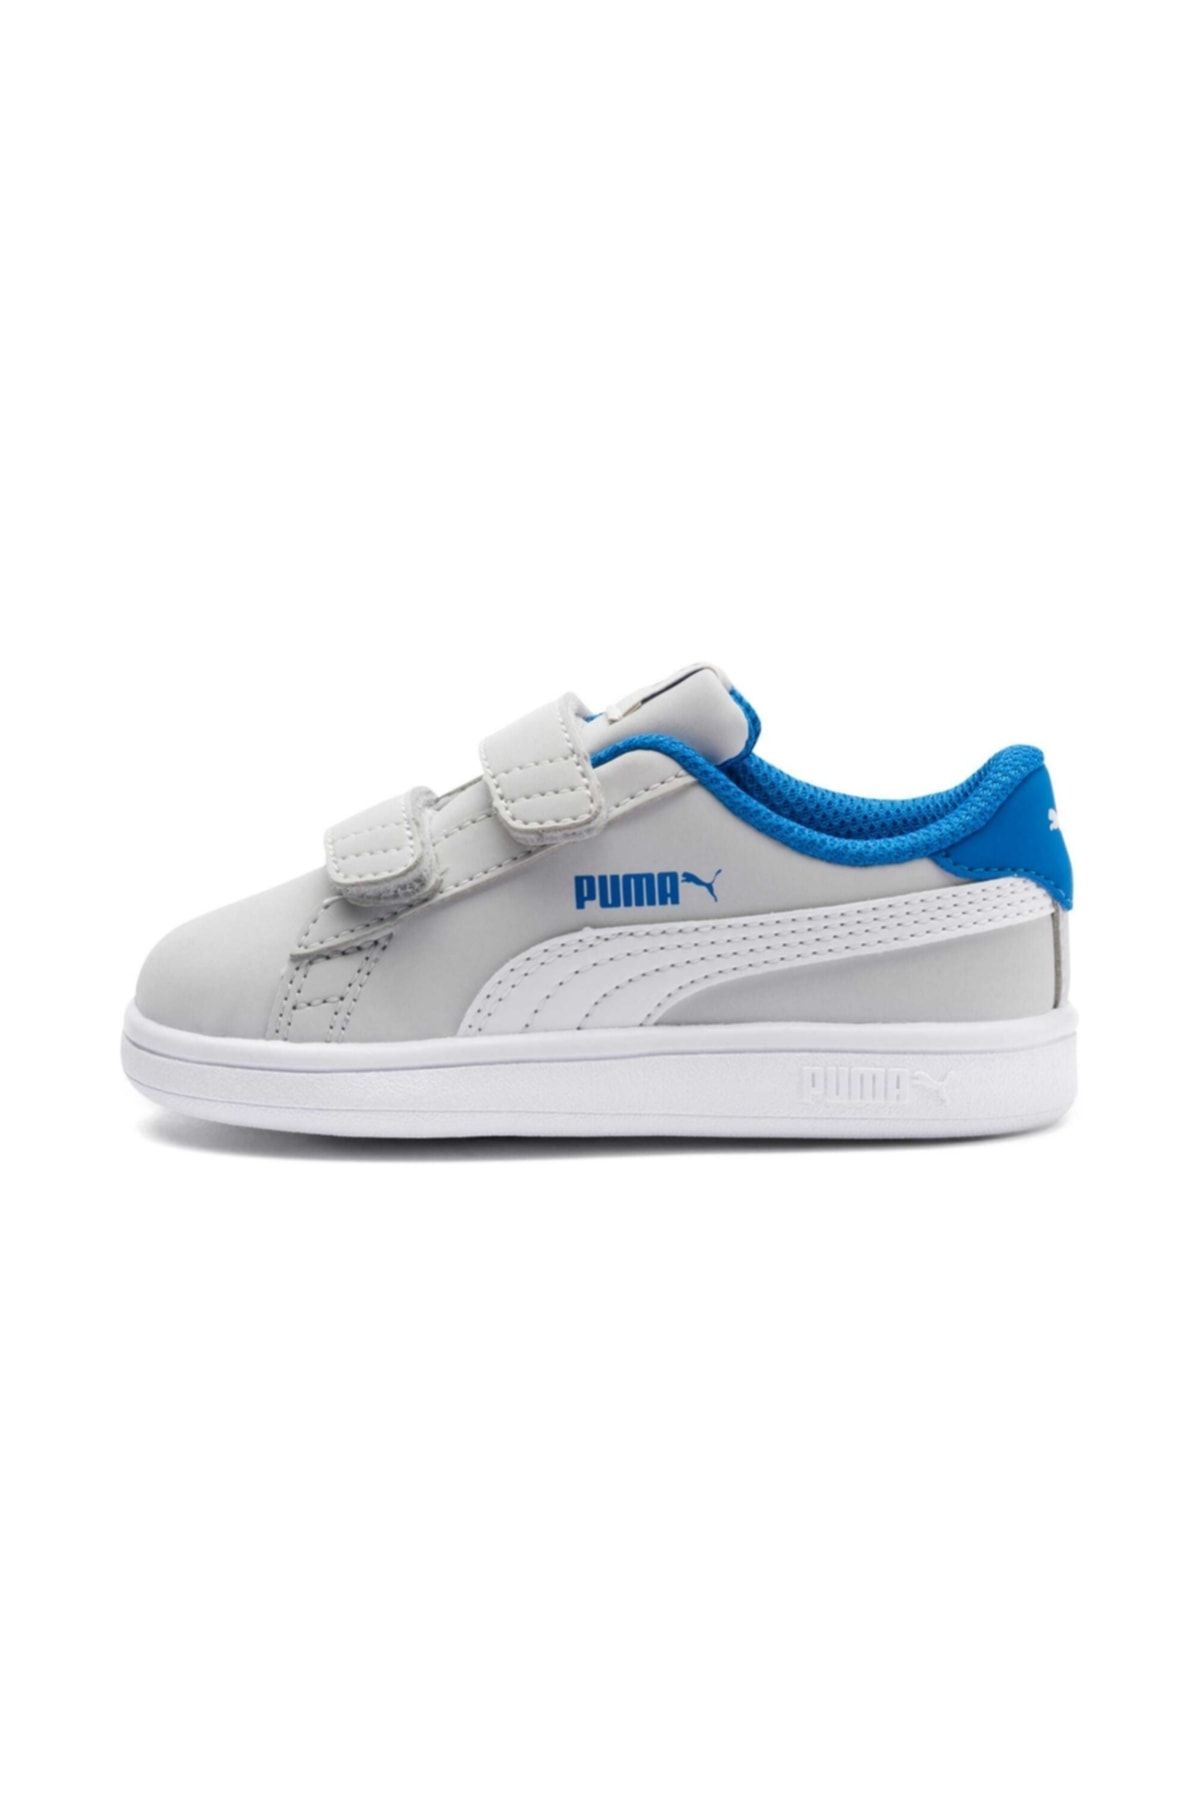 Puma Puma Smash V2 Buck V Ps Beyaz Gri Kız Çocuk Sneaker Ayakkabı 100414635